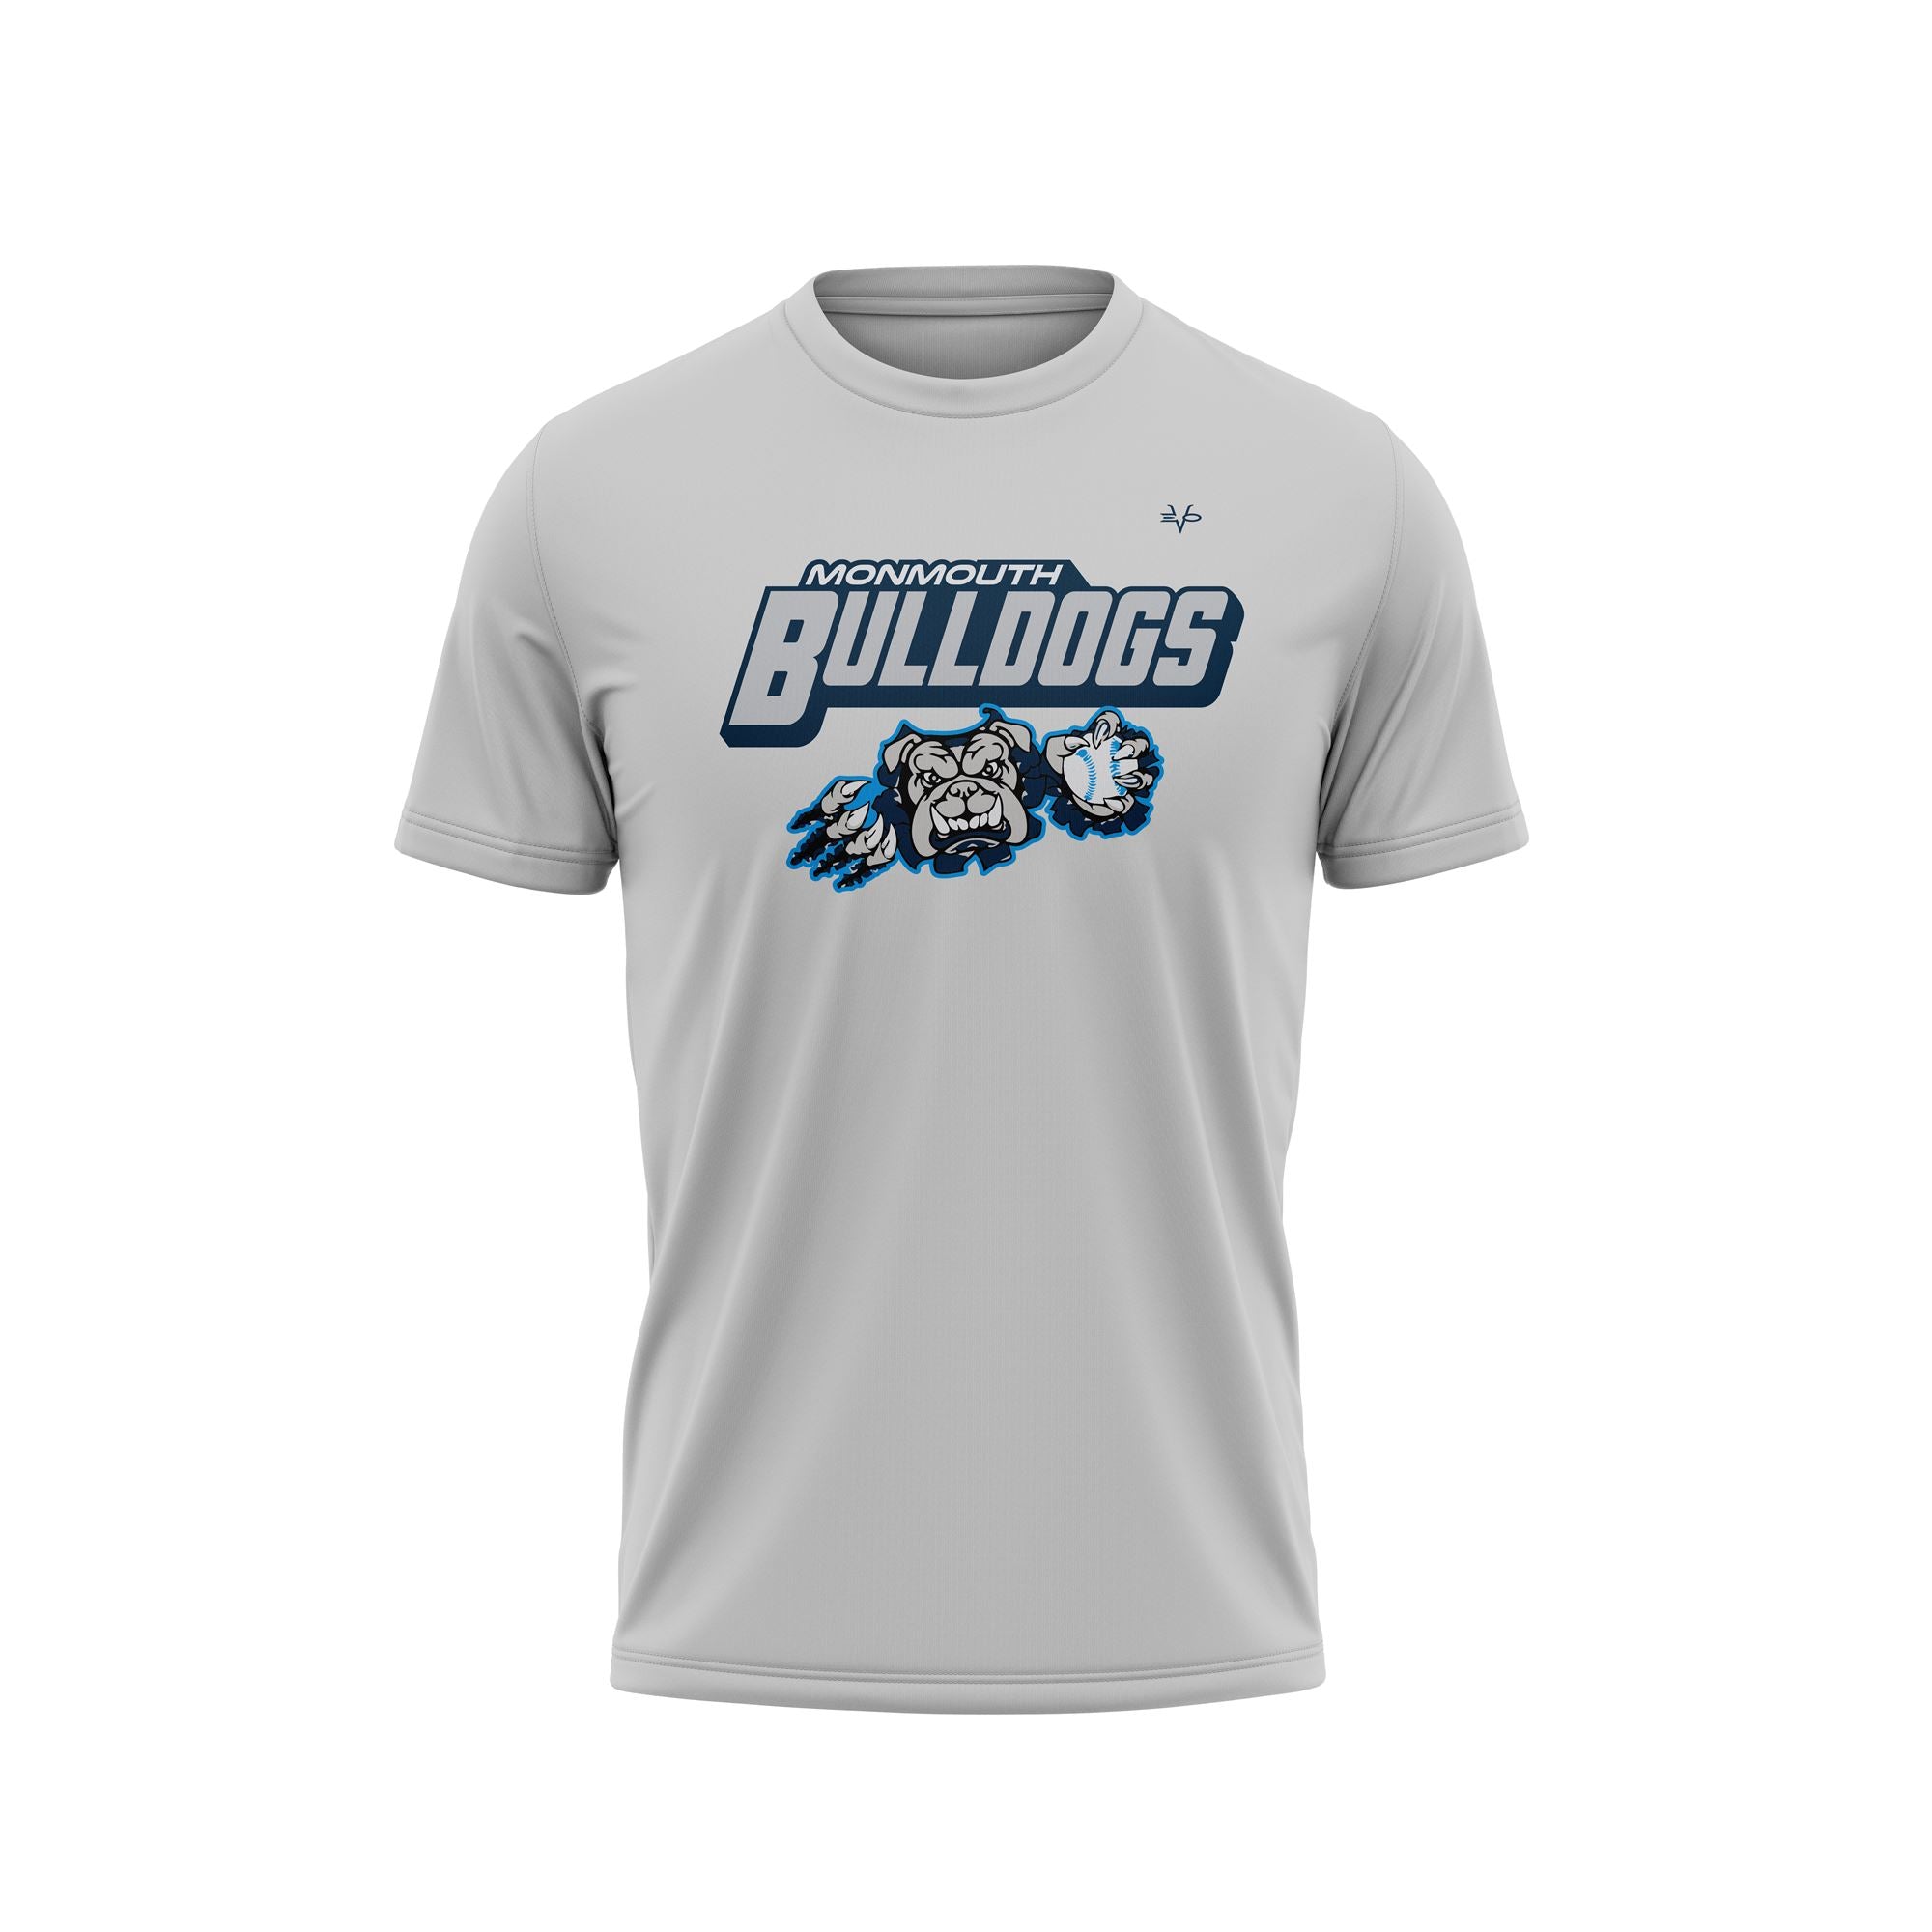 Monmouth Bulldogs Semi Sub T-Shirt